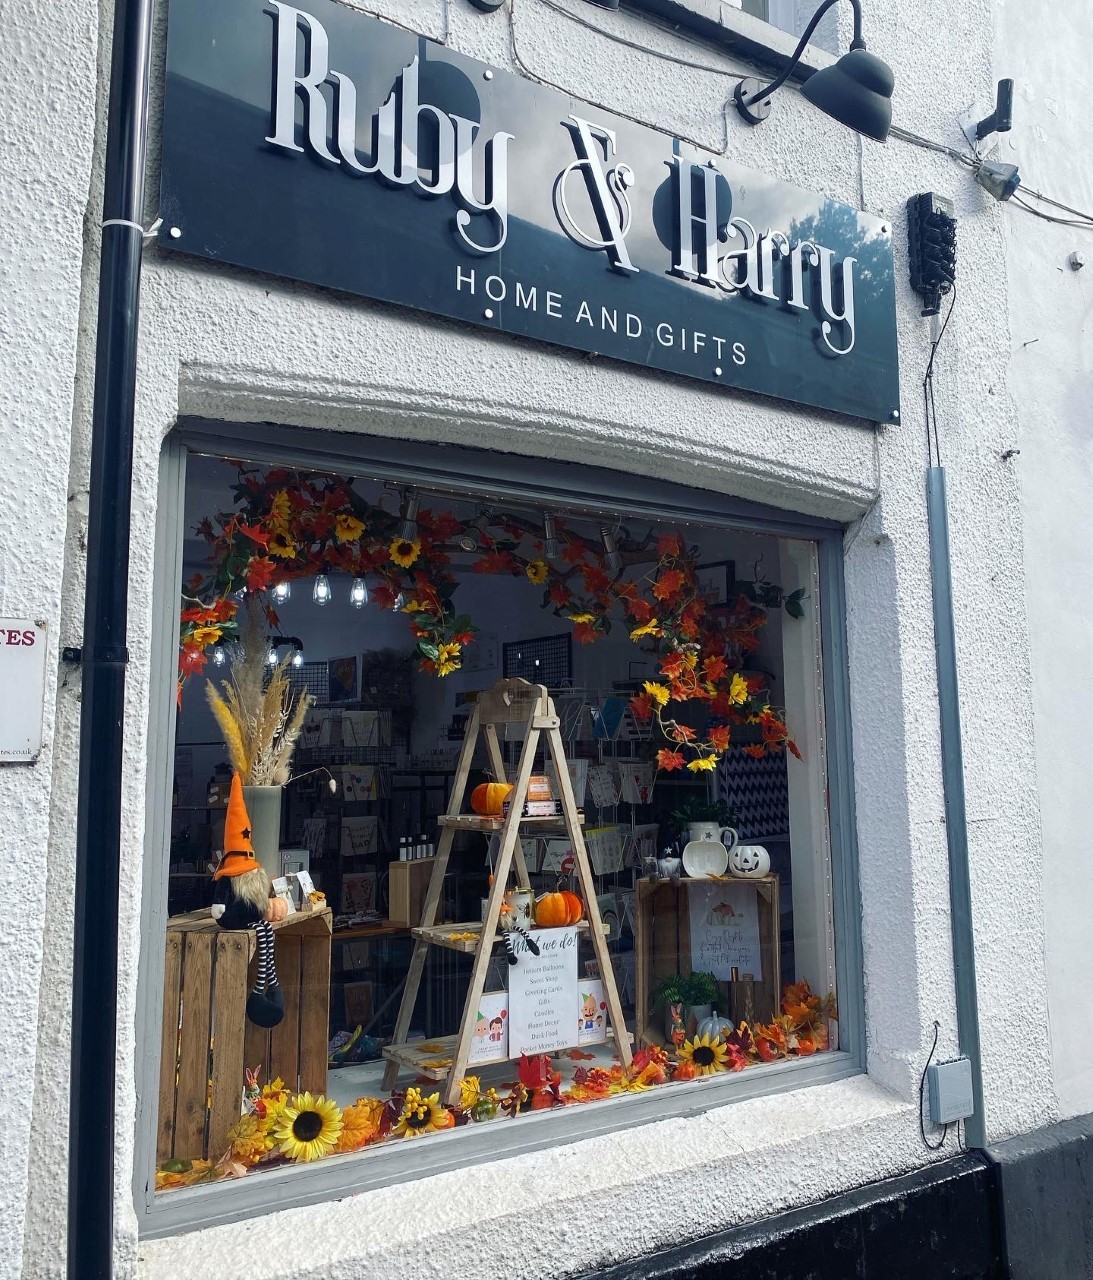 The shop on Bridgewater Street in Lymm